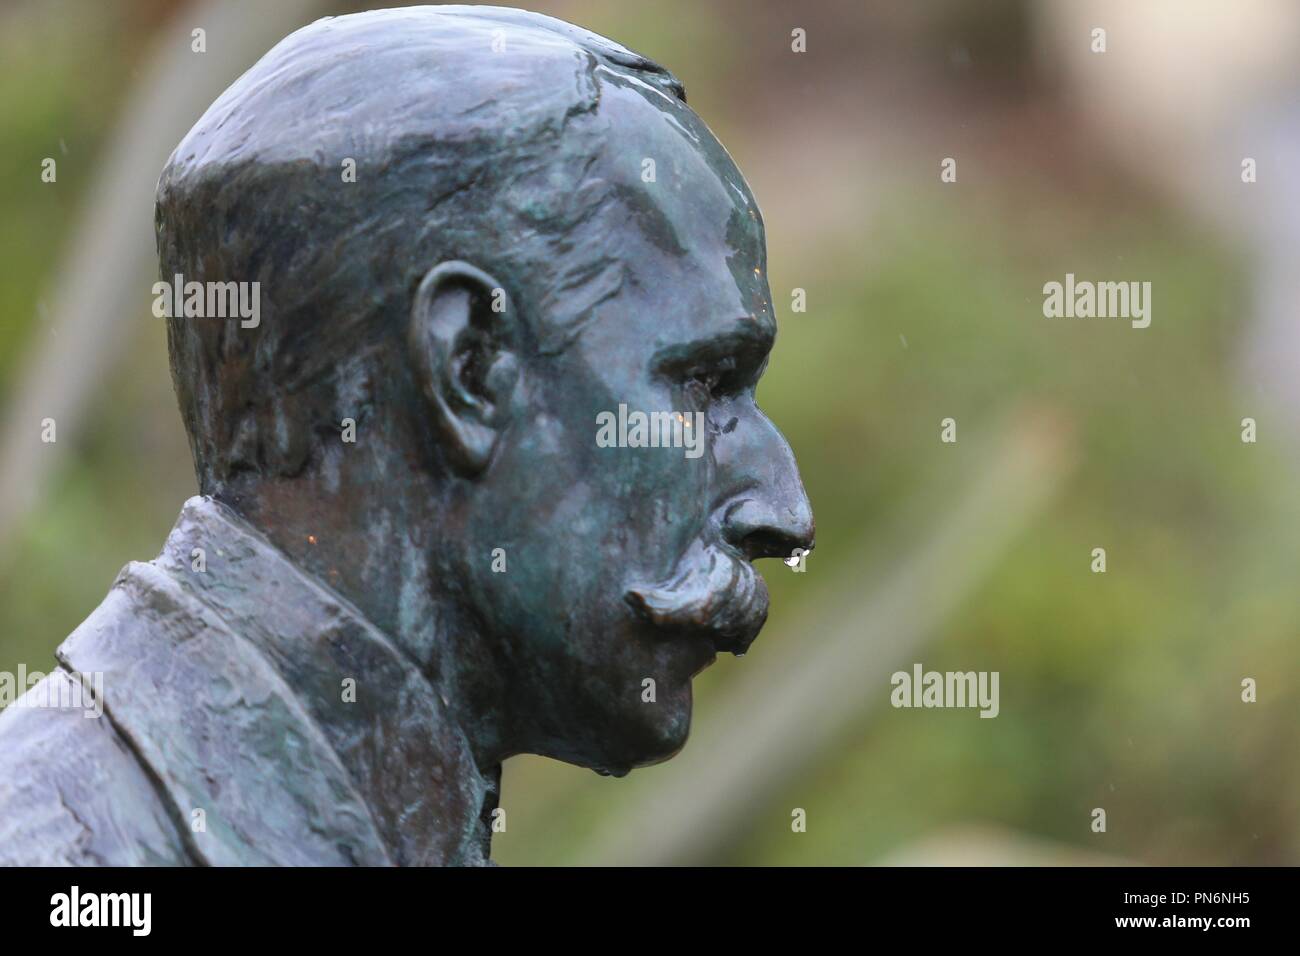 Statue of Sir Edward Elgar in wet weather, Great Malvern, UK Stock Photo